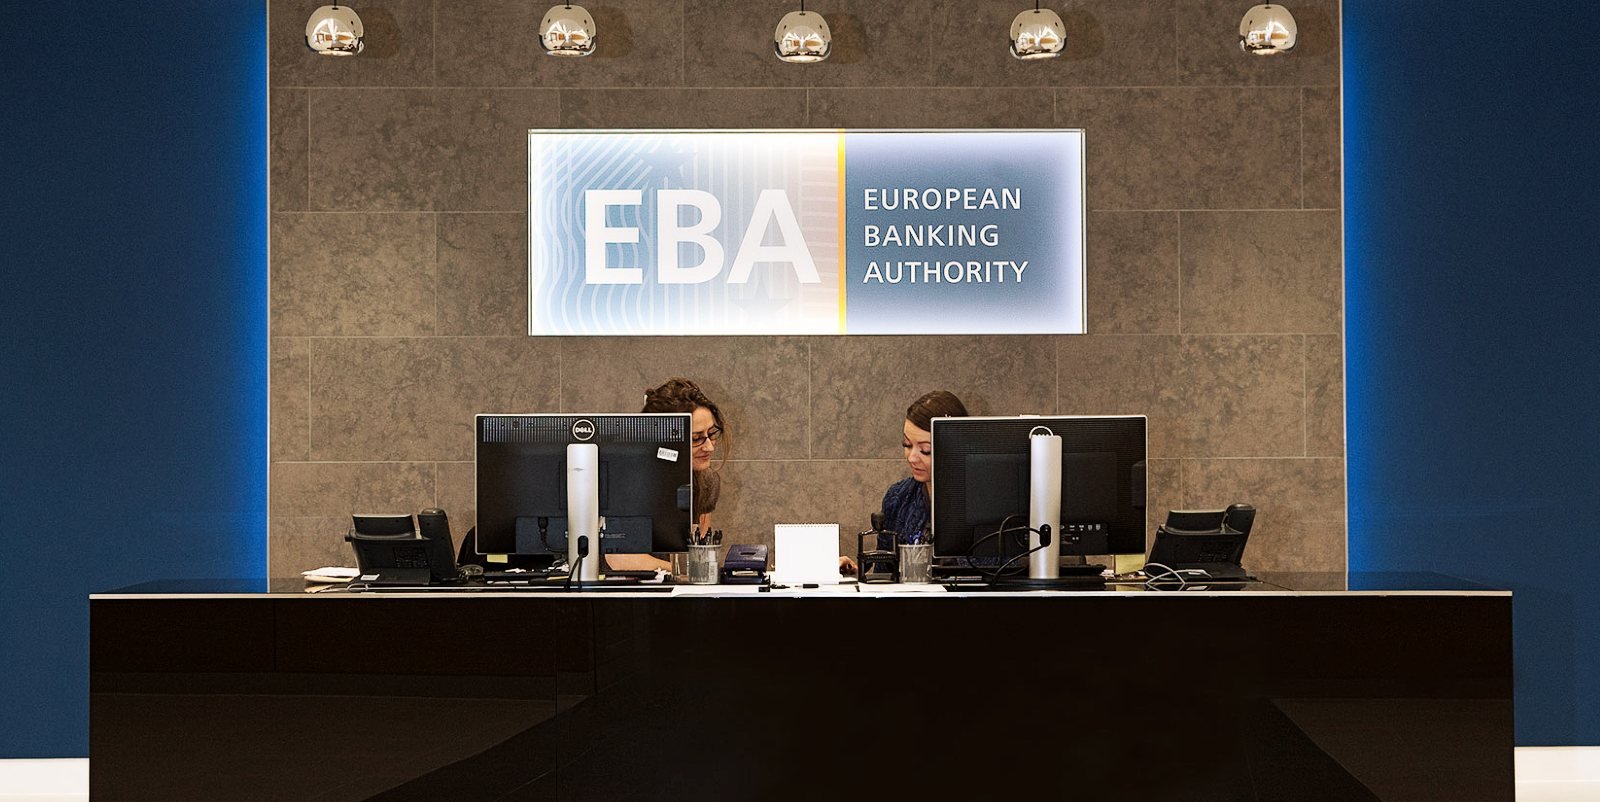 European Banking Authority discloses Exchange server hack